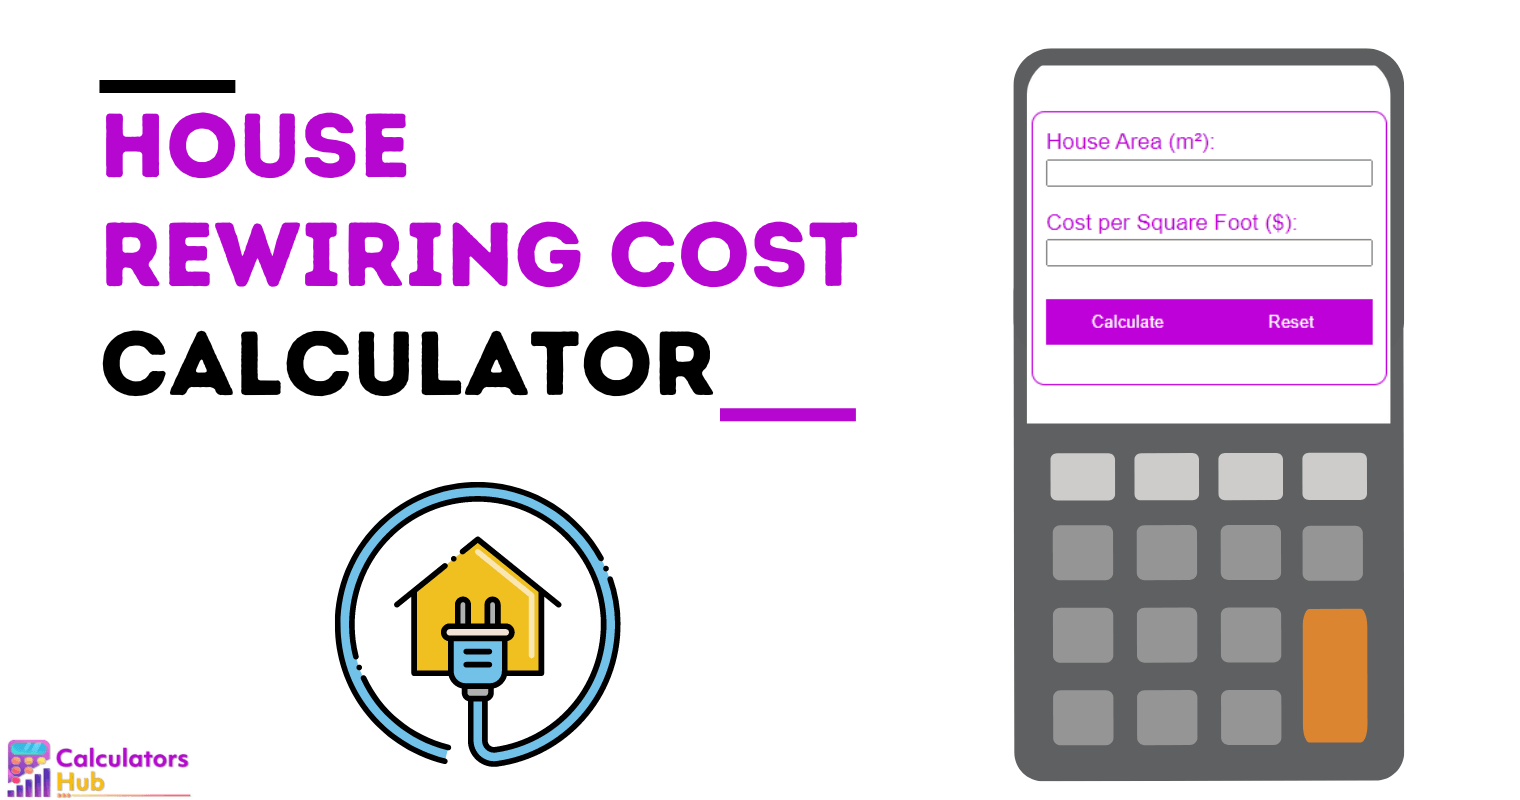 House Rewiring Cost Calculator